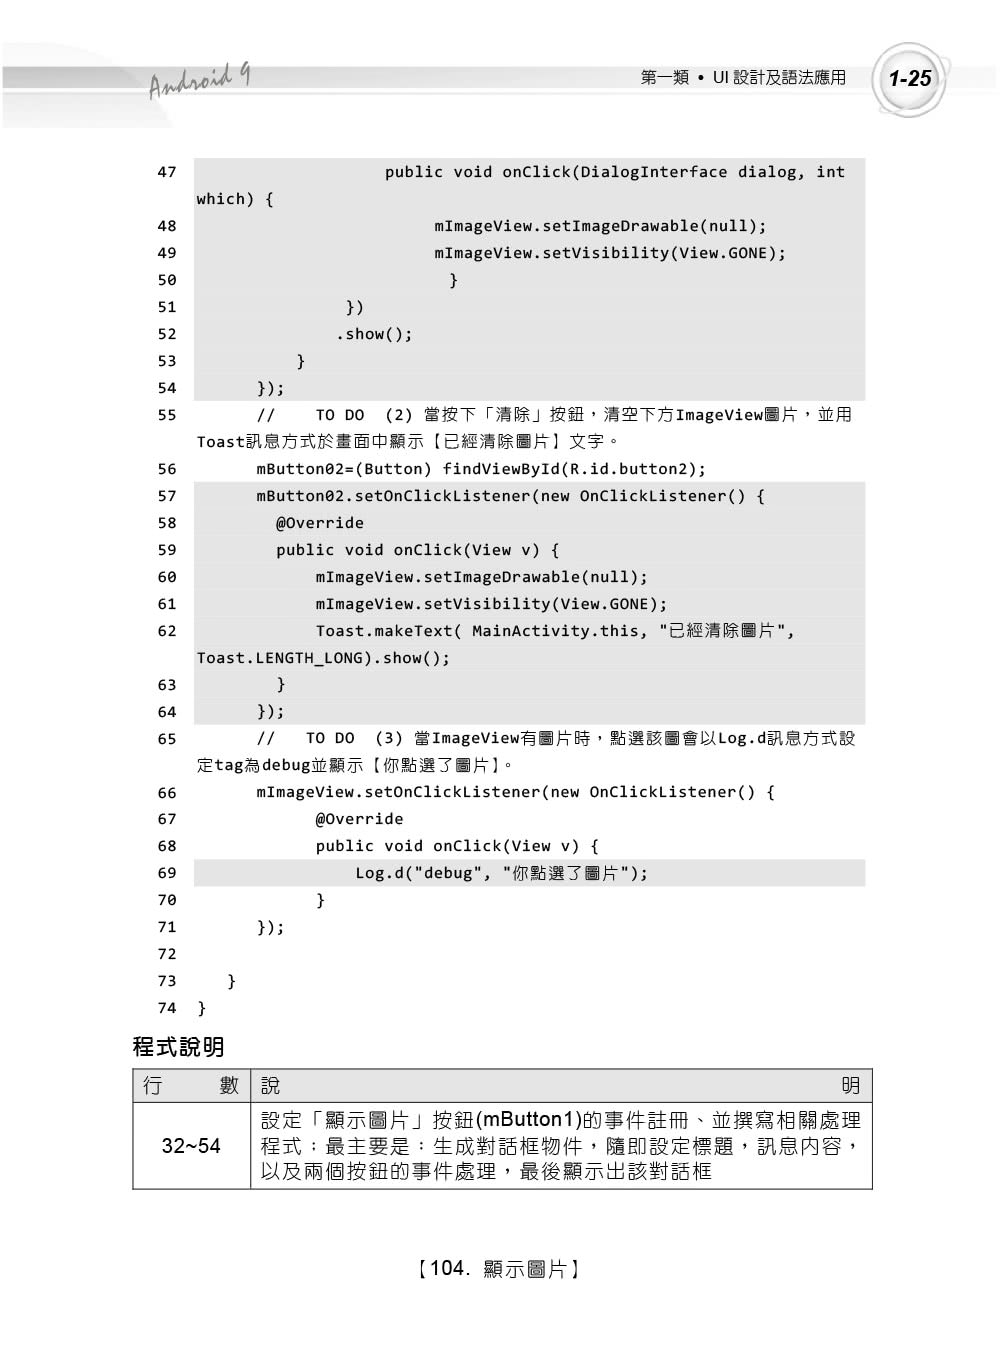 TQC＋ 行動裝置應用程式設計認證指南解題秘笈－Android 9